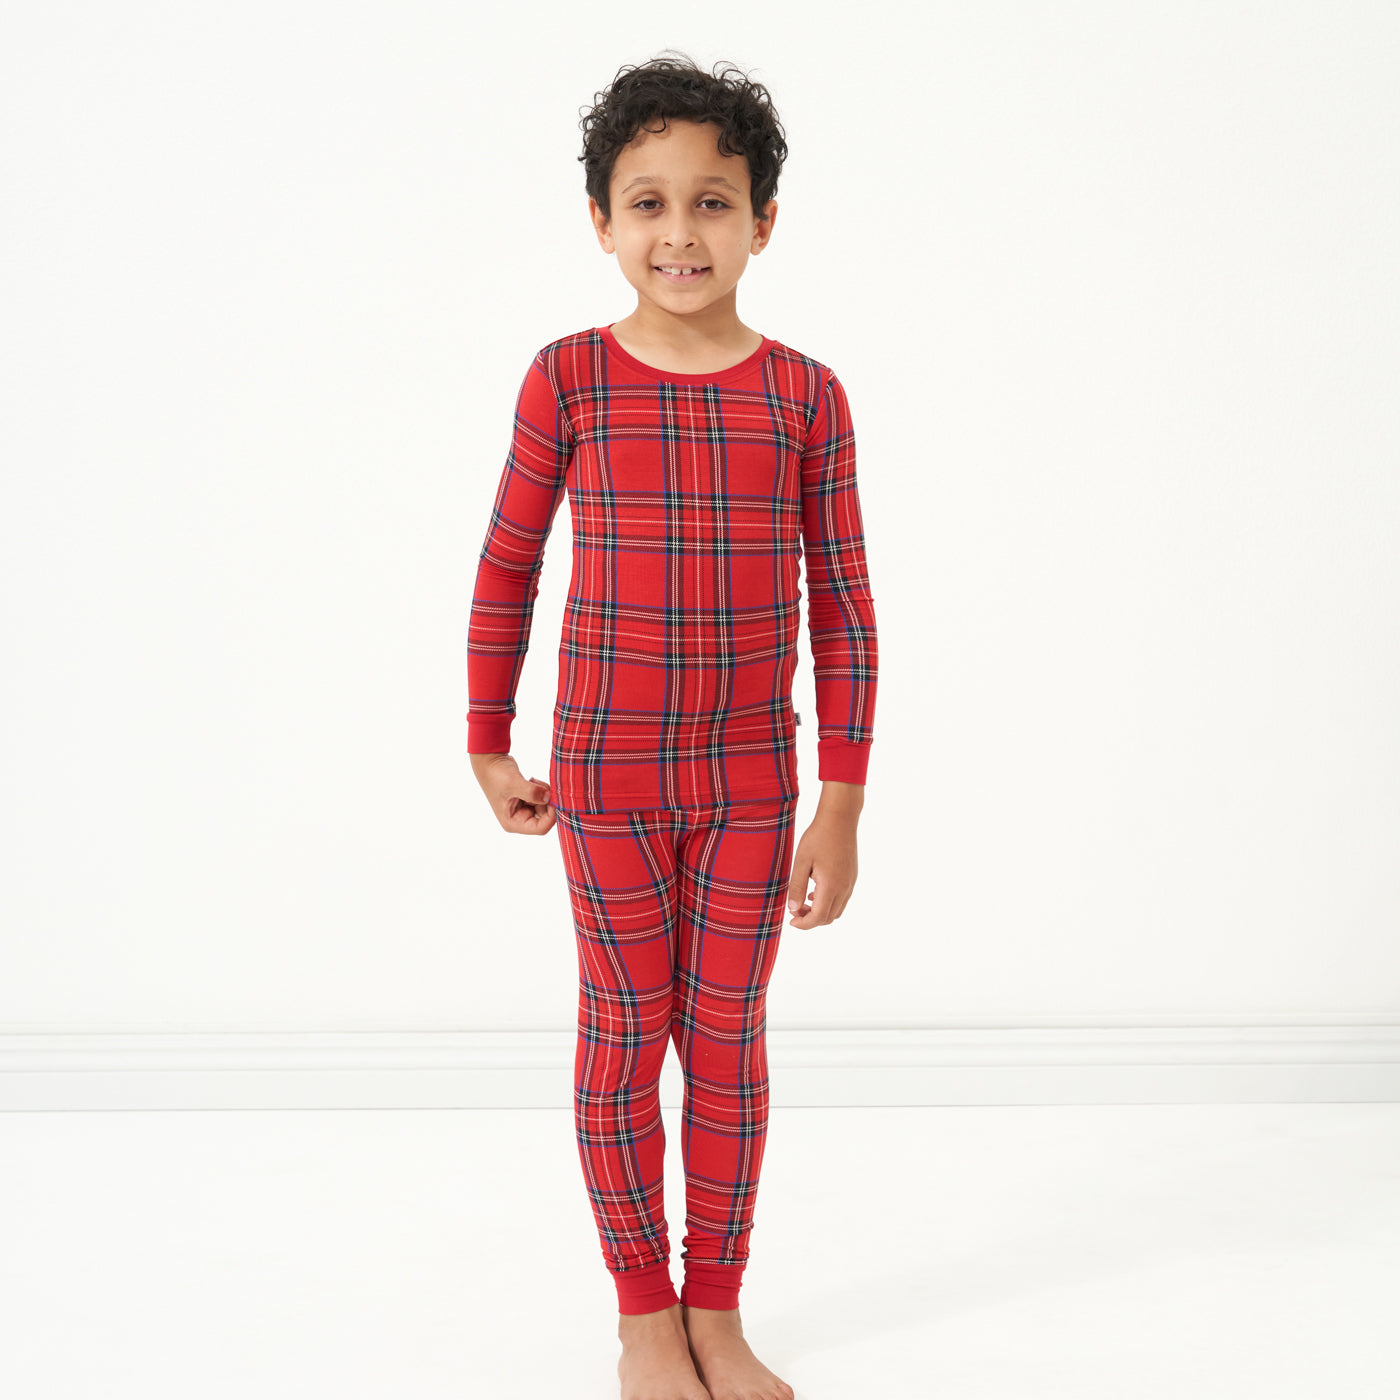 Child wearing a Holiday Plaid two piece pajama set